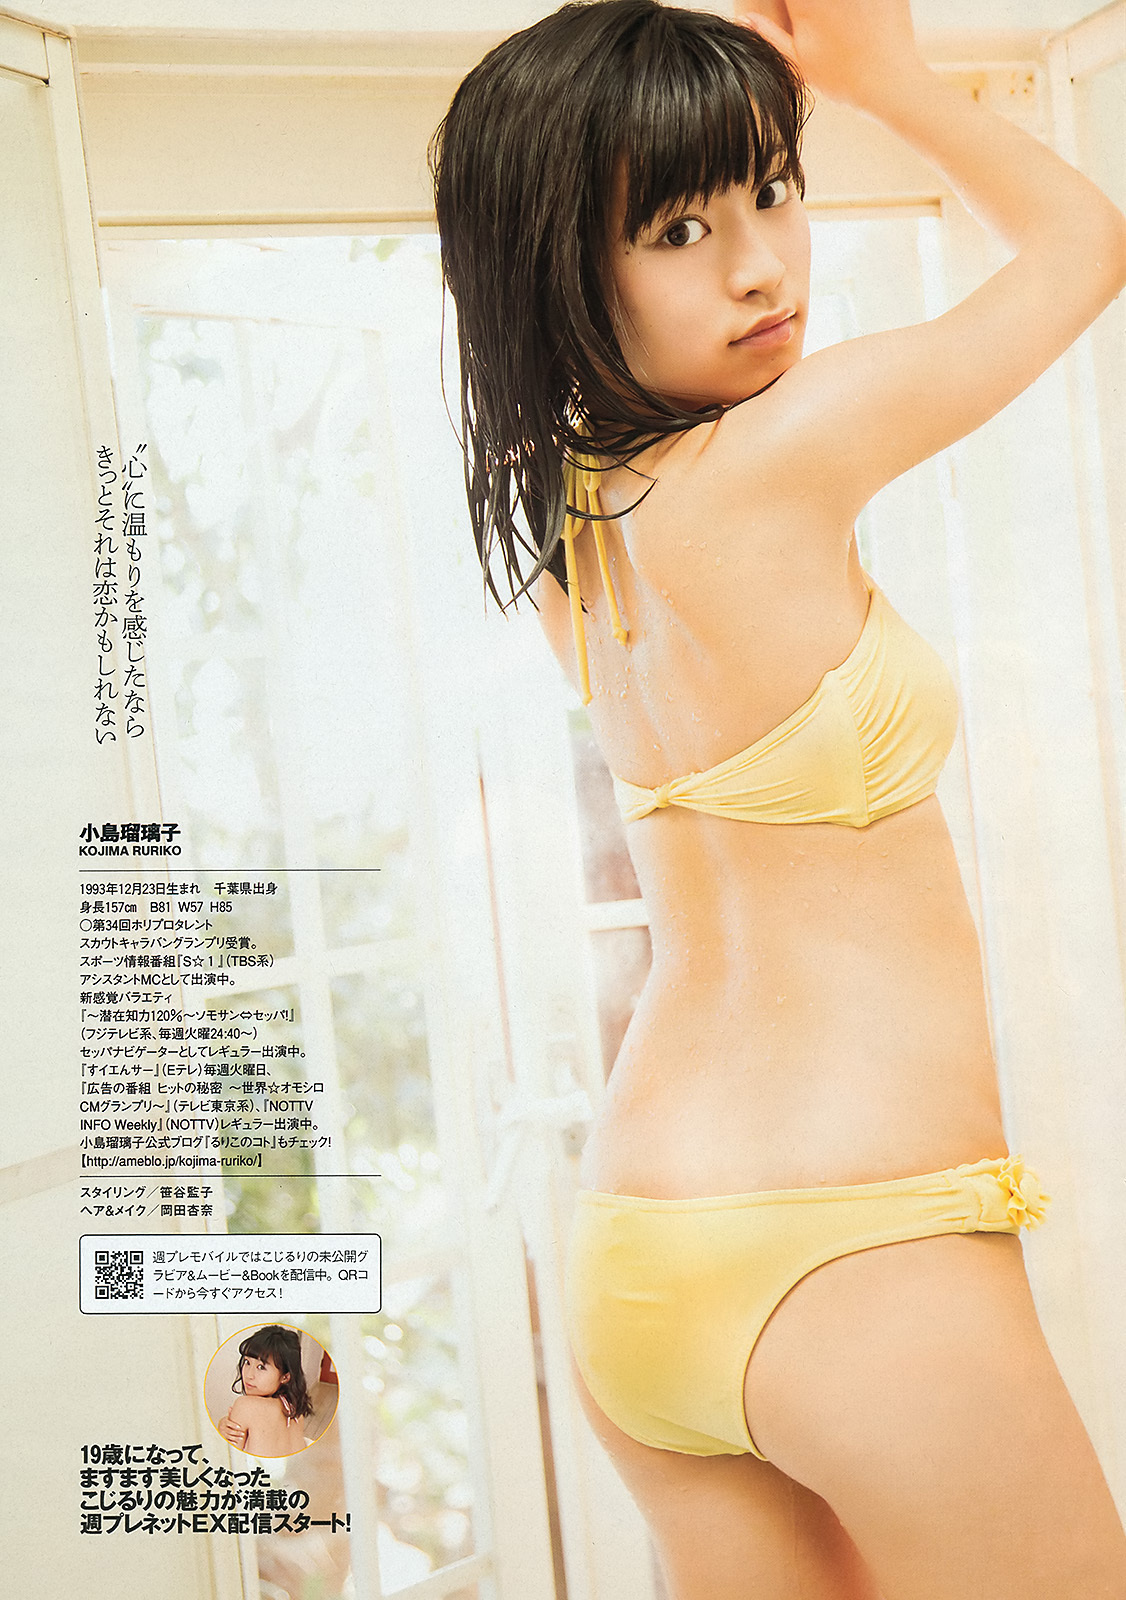 Komoto Matsumoto is like a vegetable, Koichi Nai is like a vegetable [weekly Playboy]